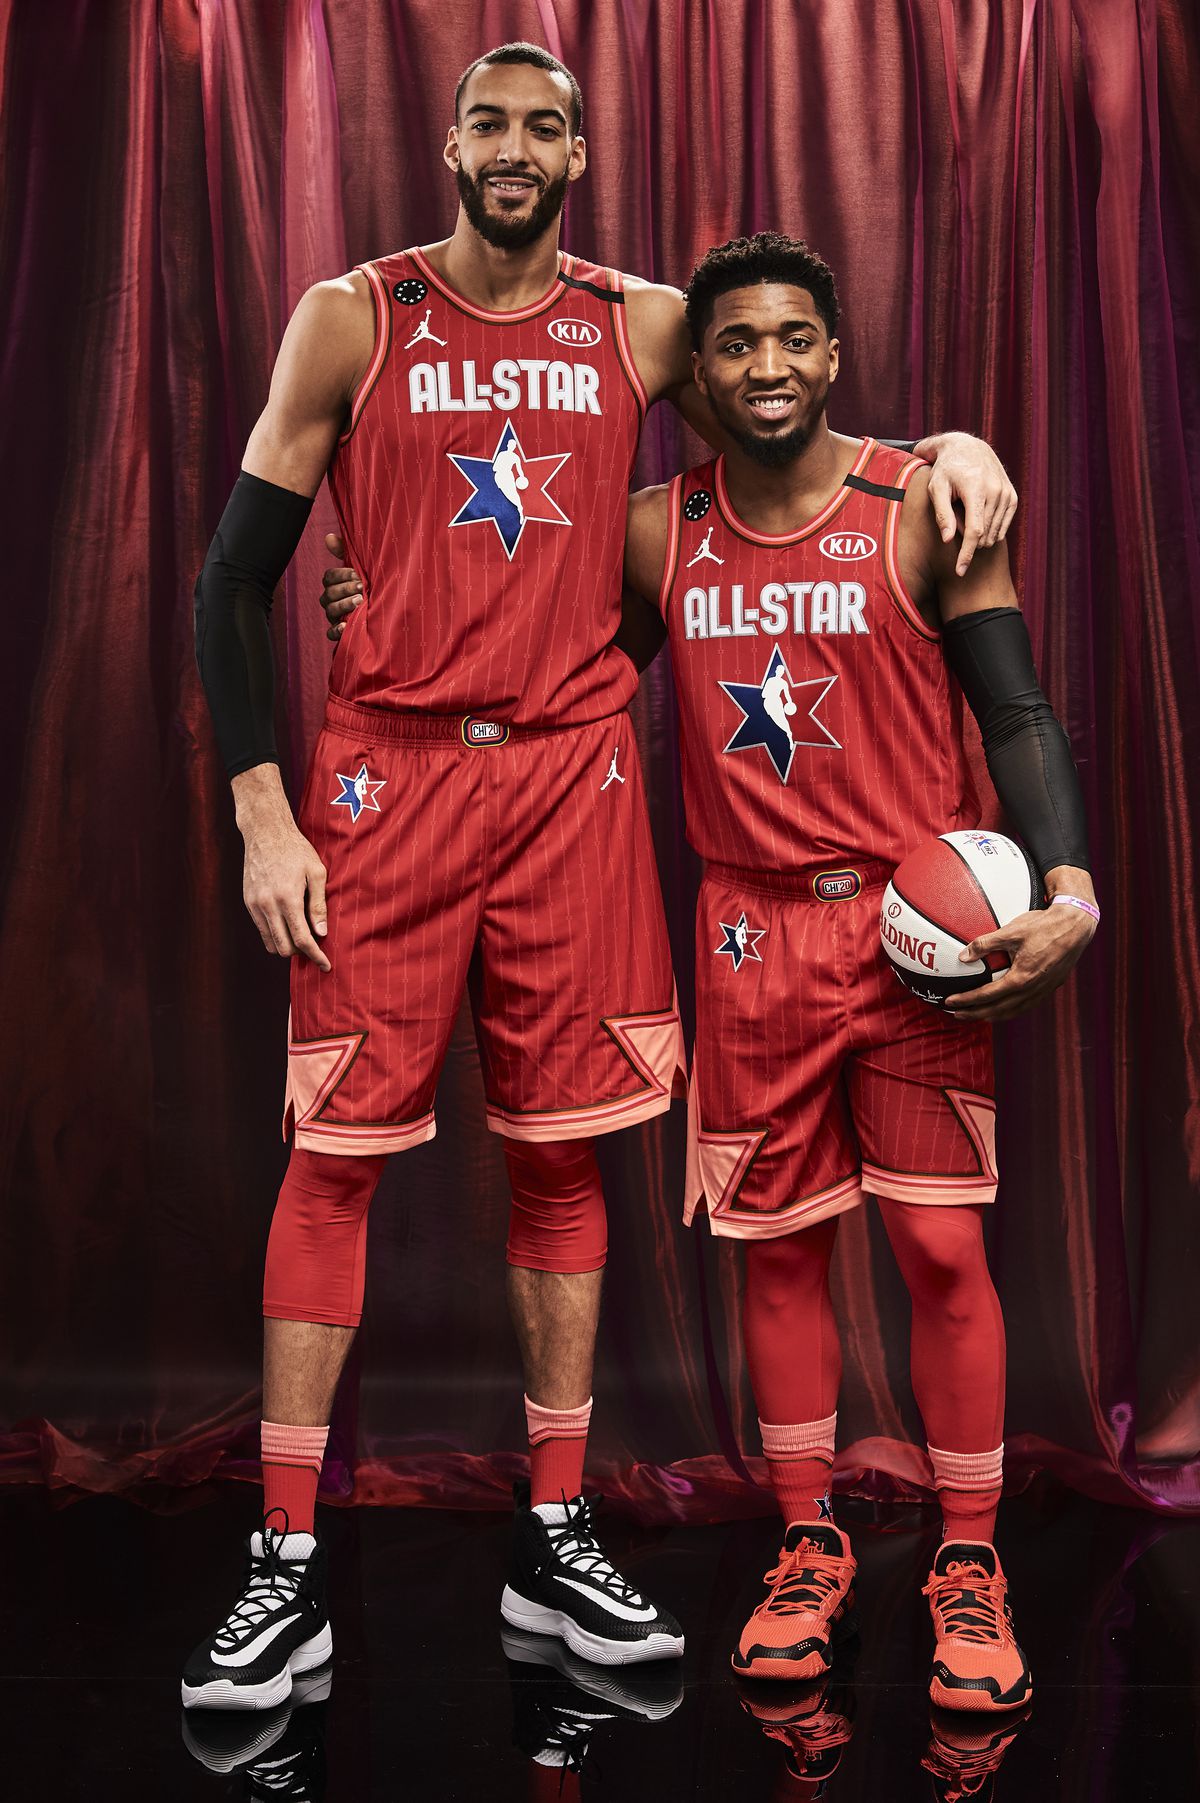 Rudy and Donovan as 2020 NBA All-Stars